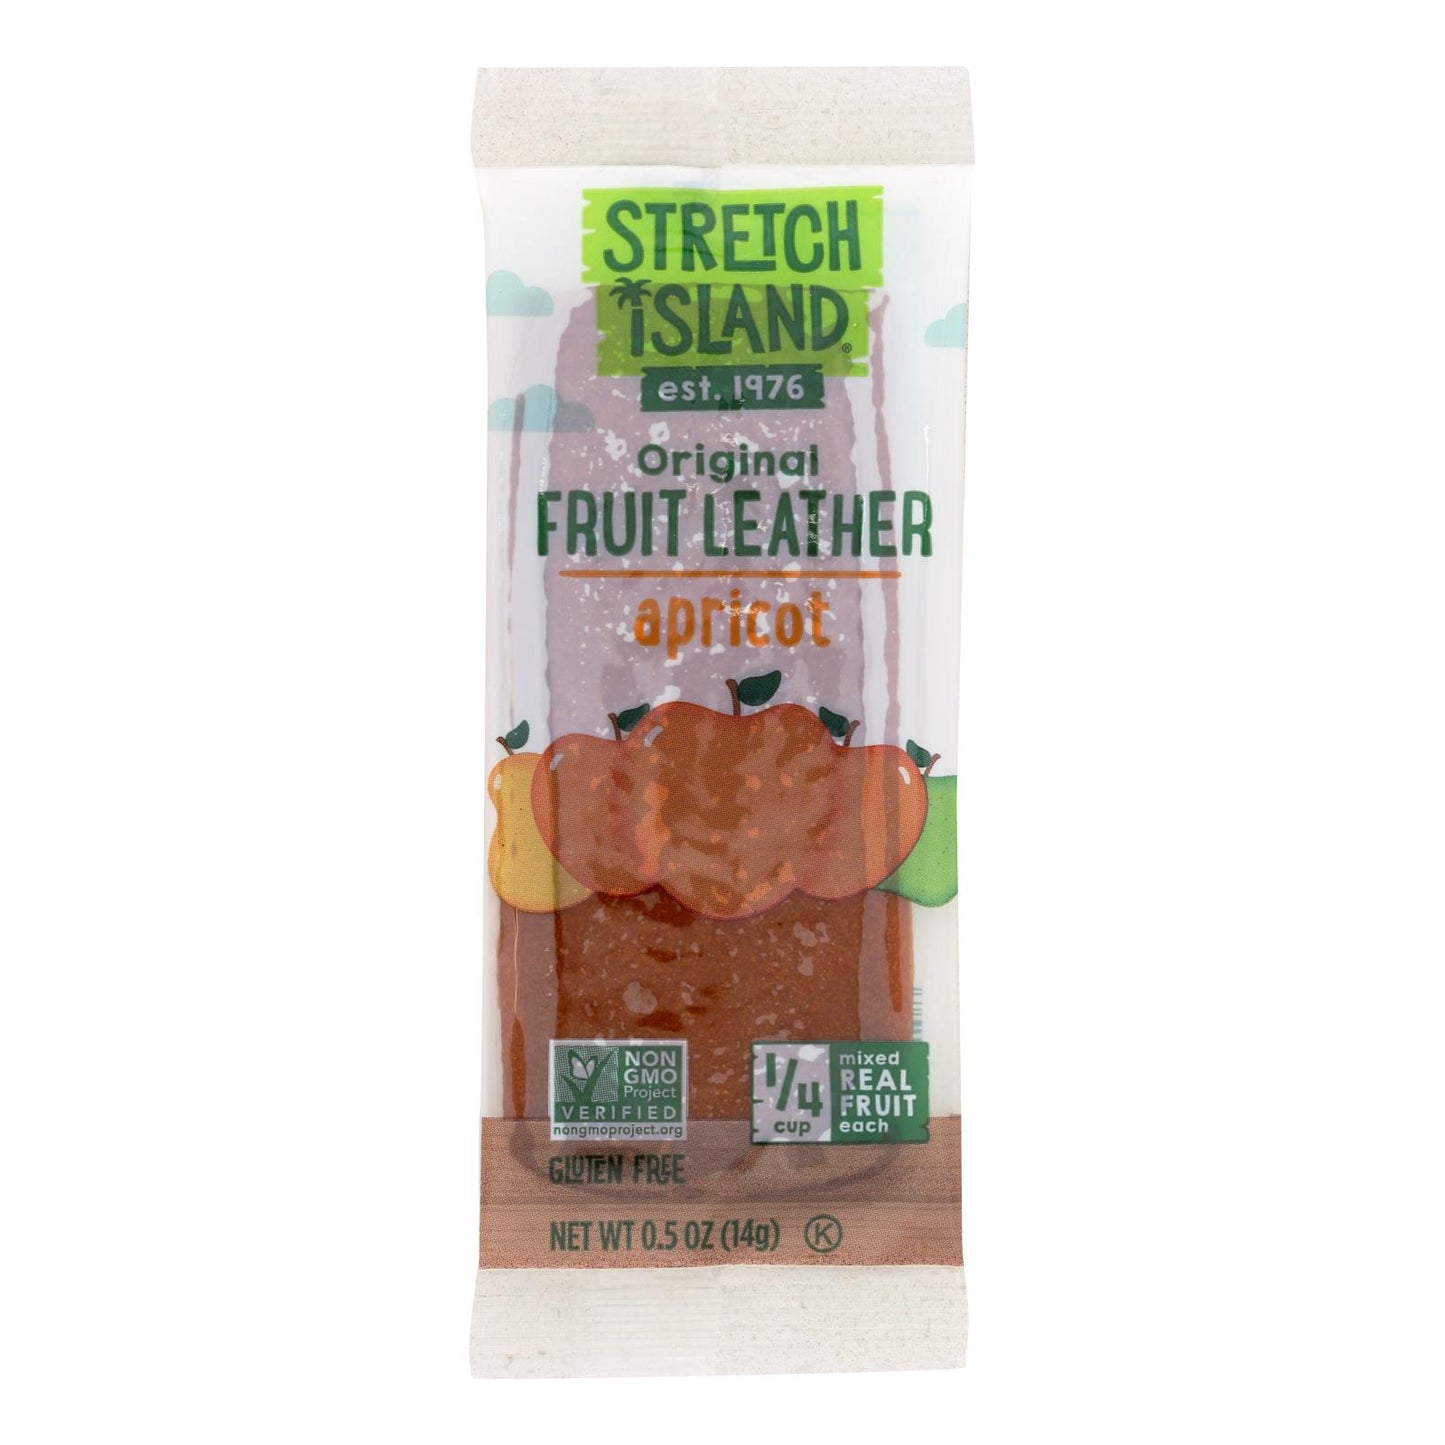 Stretch Island Fruit Leather Strip - Abundant Apricot - .5 Oz - Case Of 30